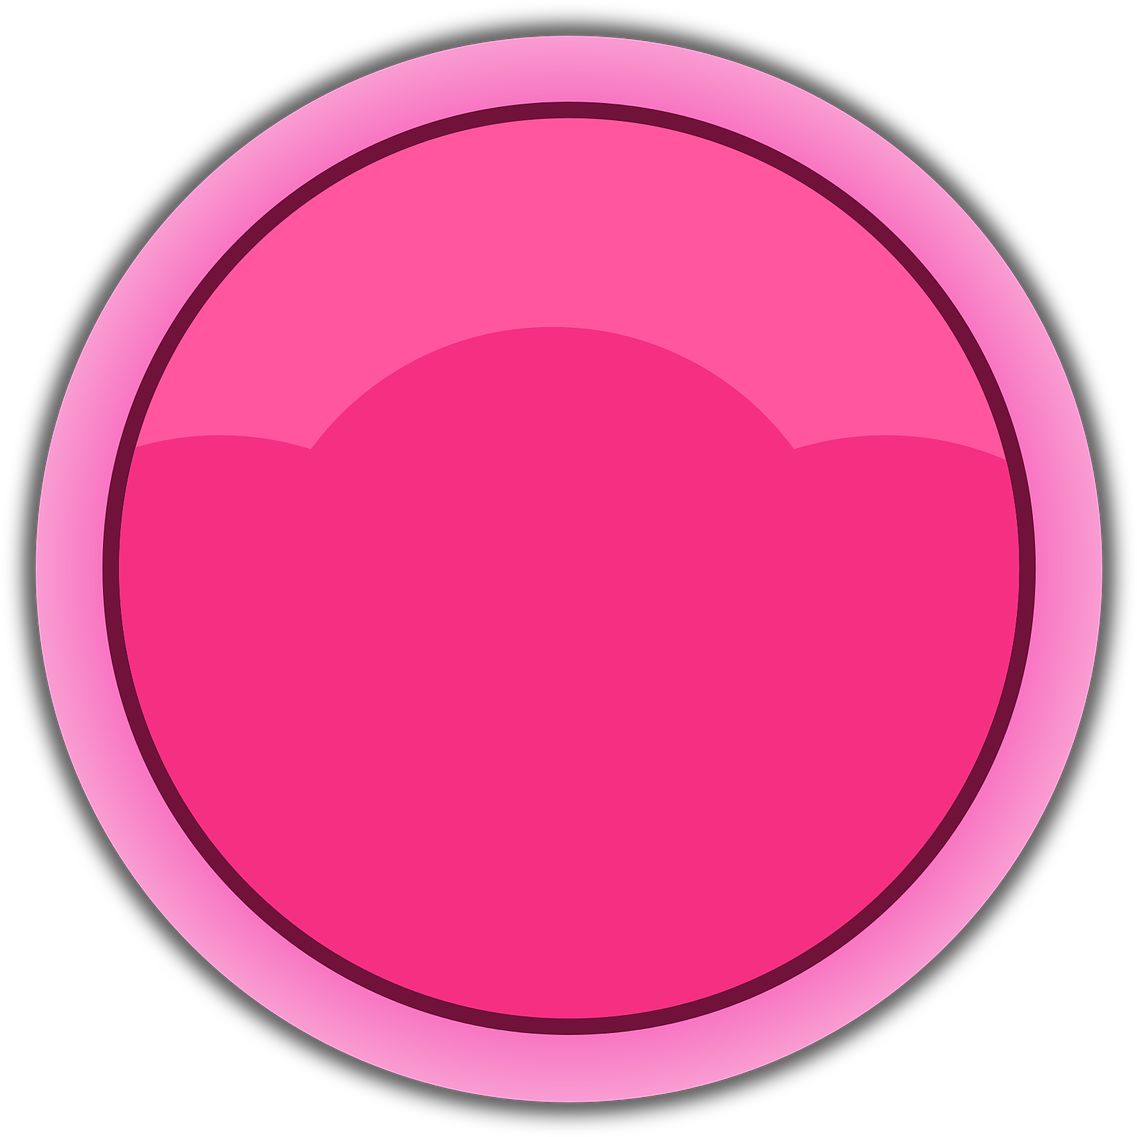 A Pink Circle With Black Border